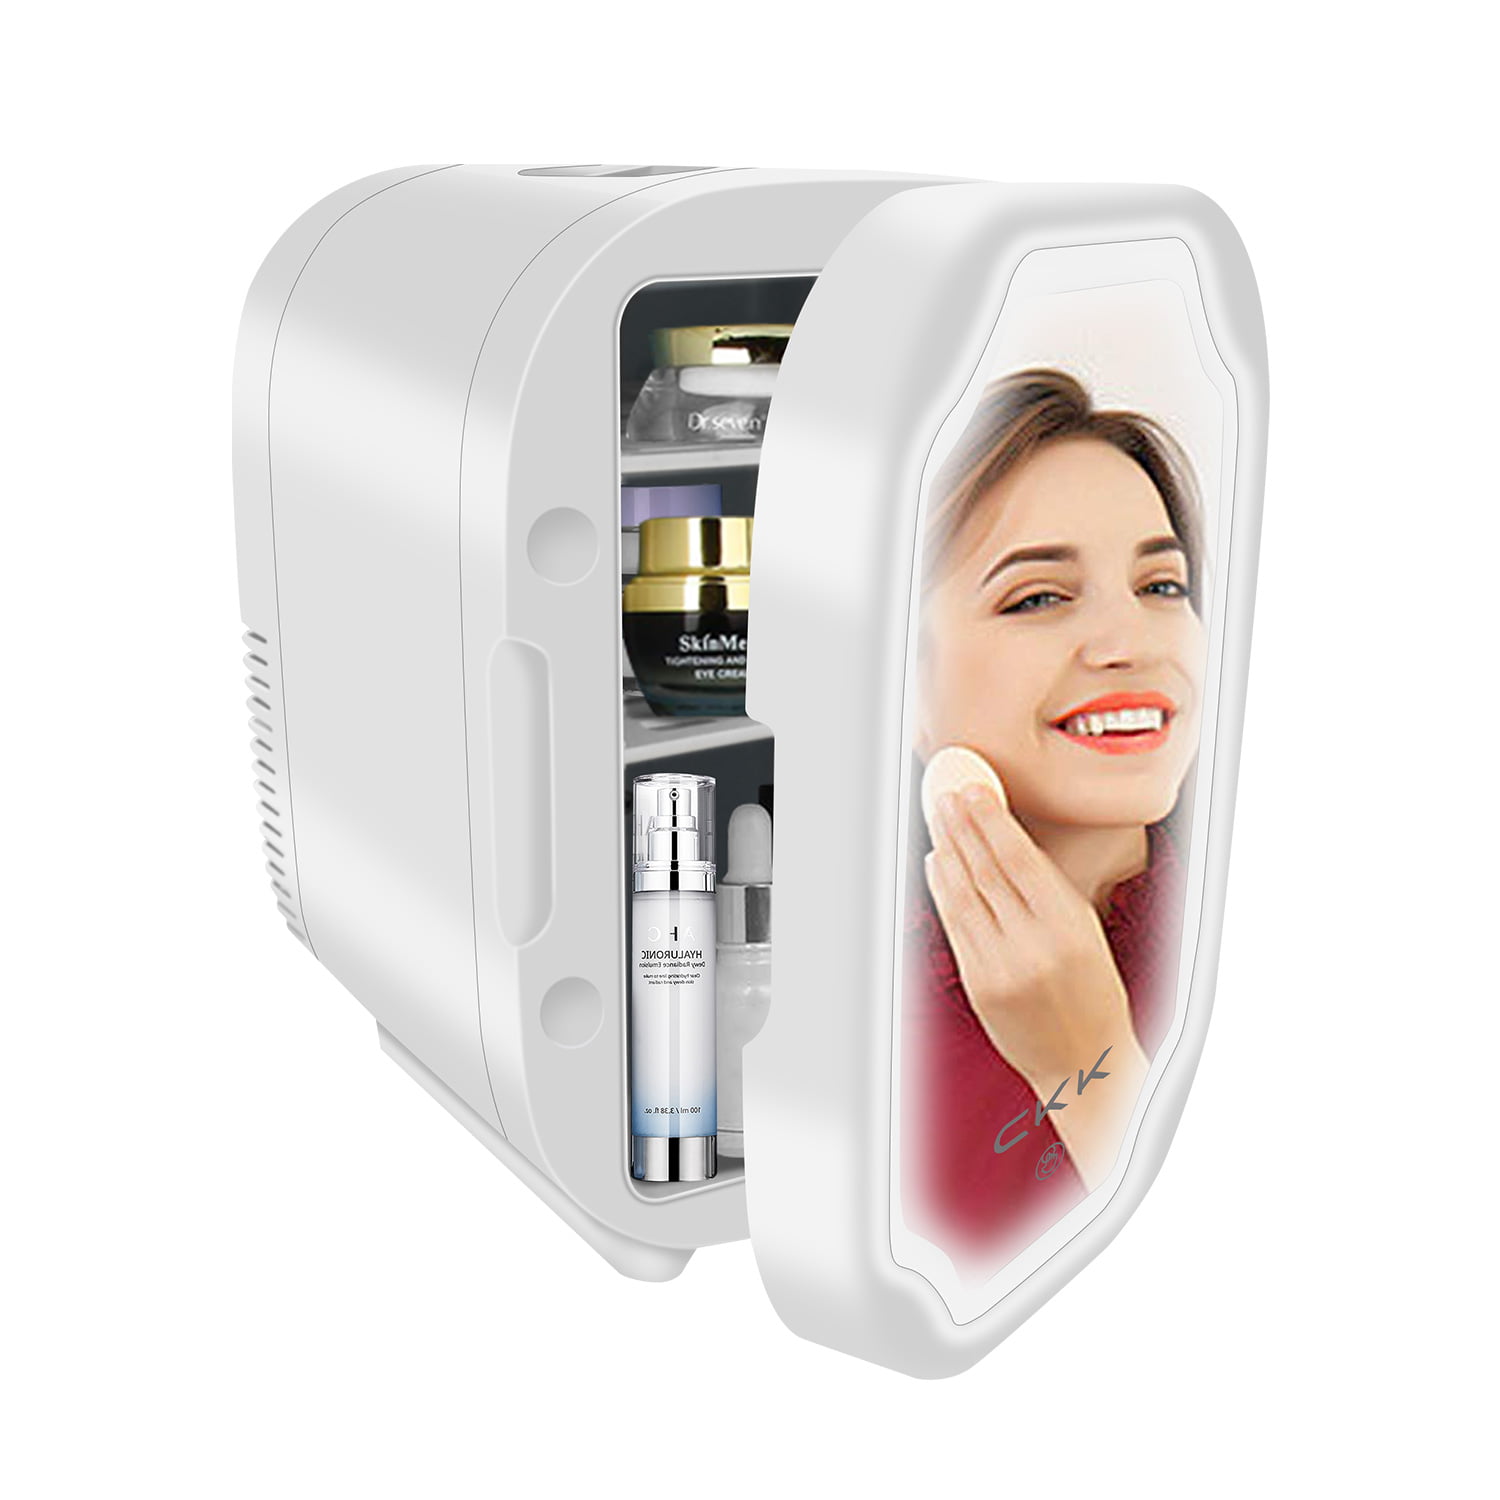 Portable Small Compact Fridge Refrigerator Cooler & Warmer Dorm Bedroom Travel 